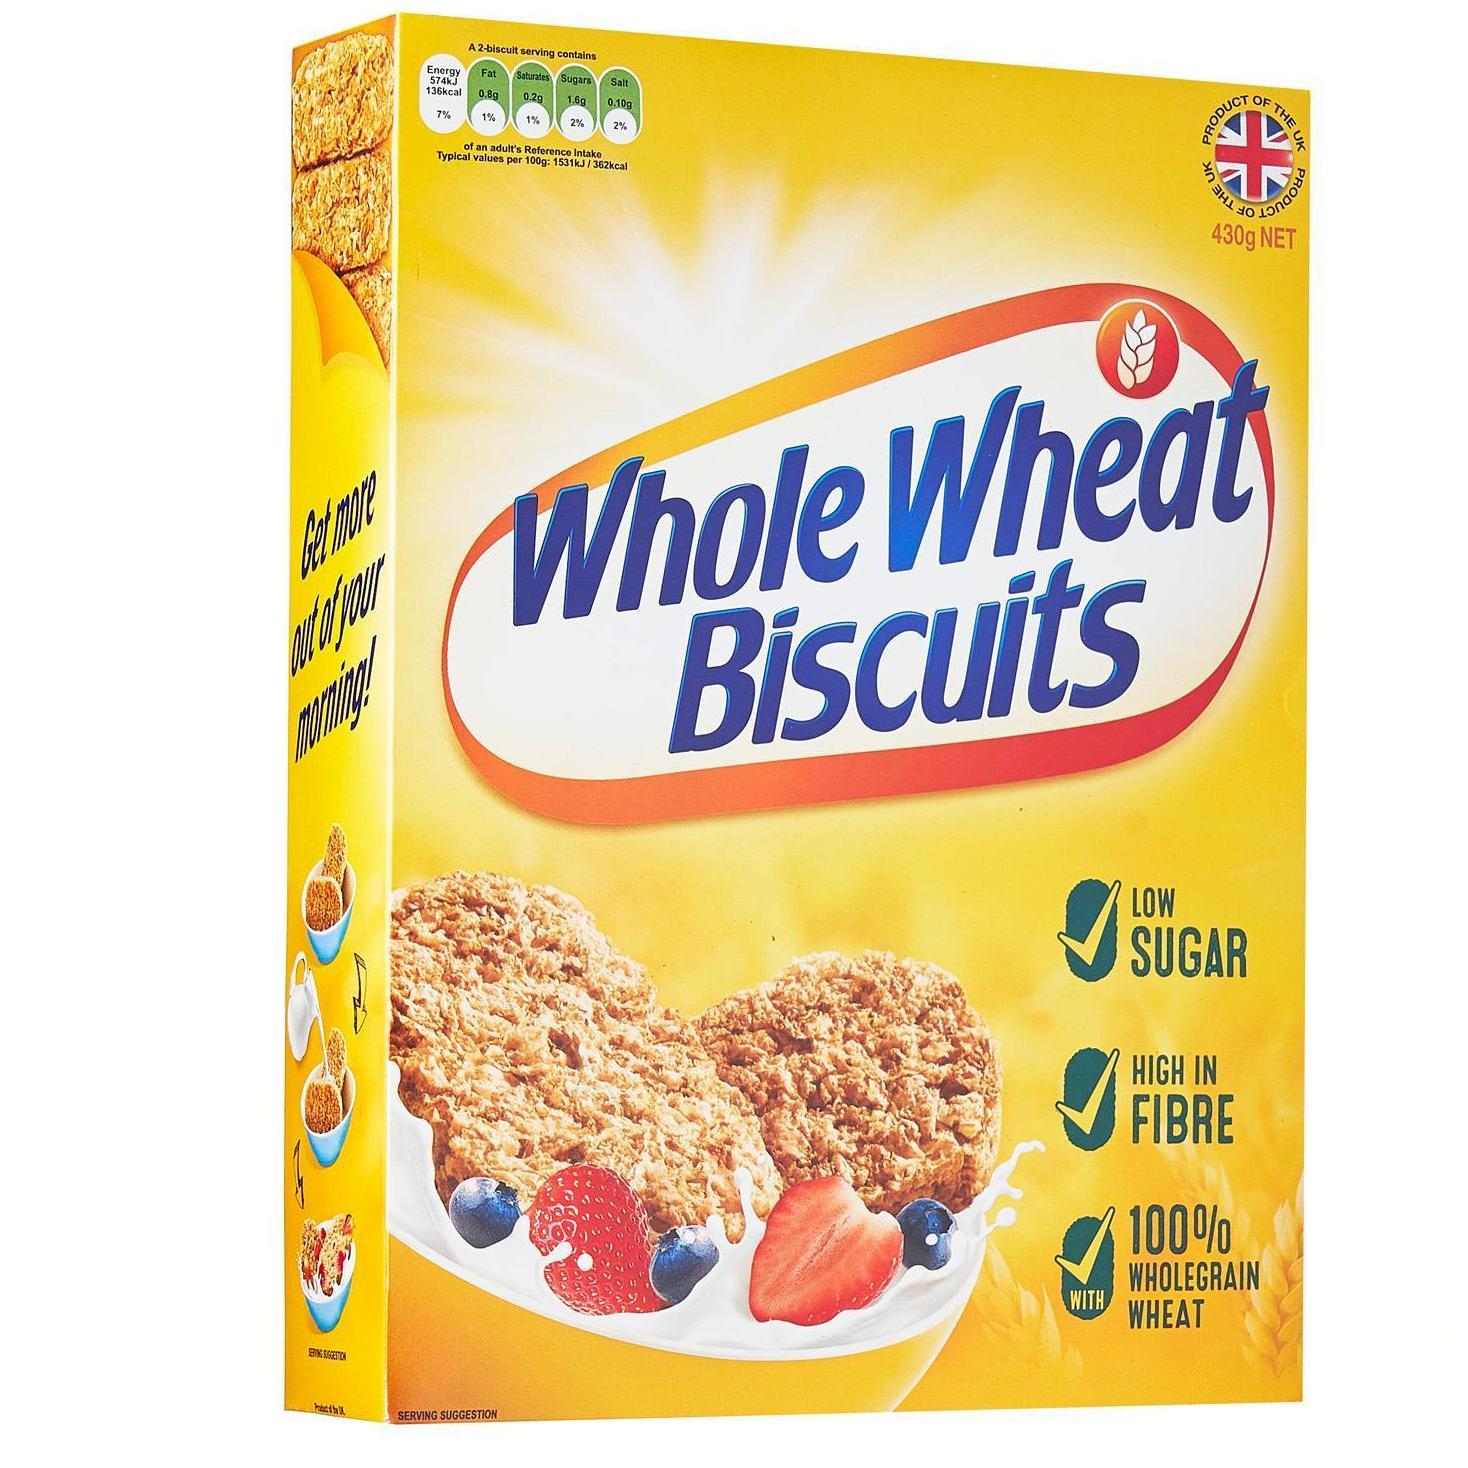 Whole Wheat Biscuits โฮล วีท บิสกิต ข้าวสาลีอบแบบชิ้น (UK Imported) 430g.